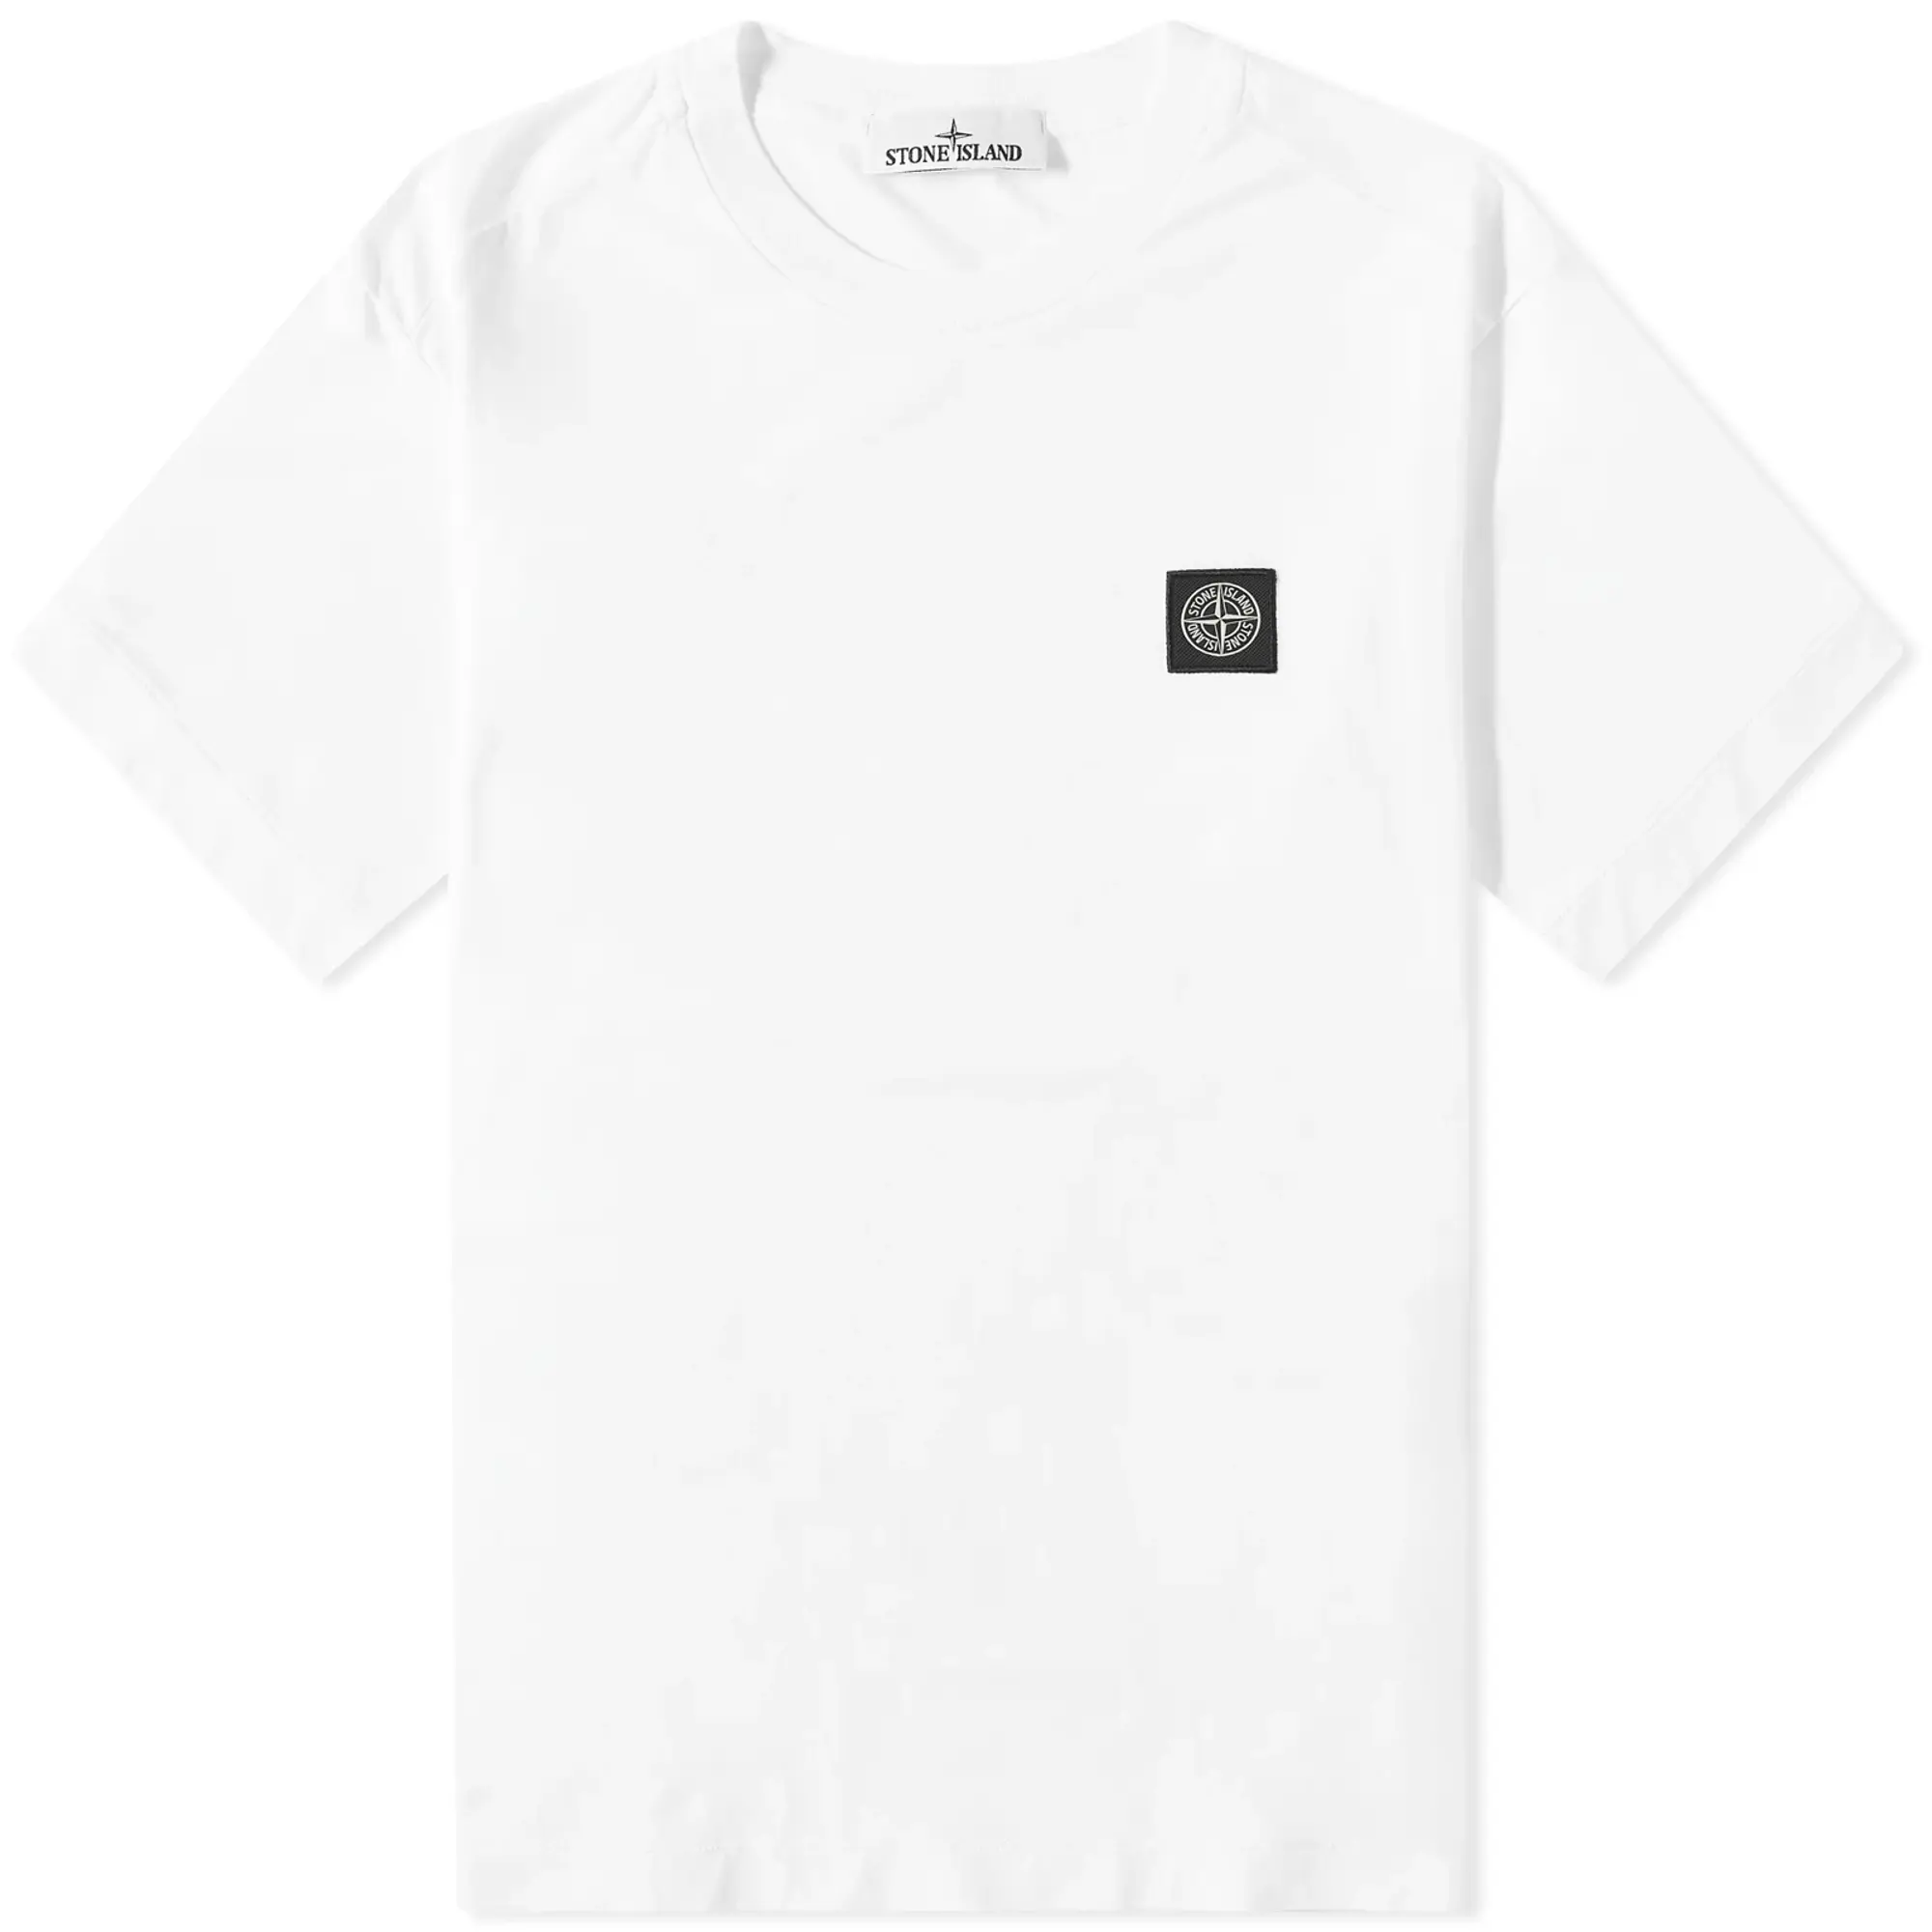 Stone Island Men's Patch T-Shirt White